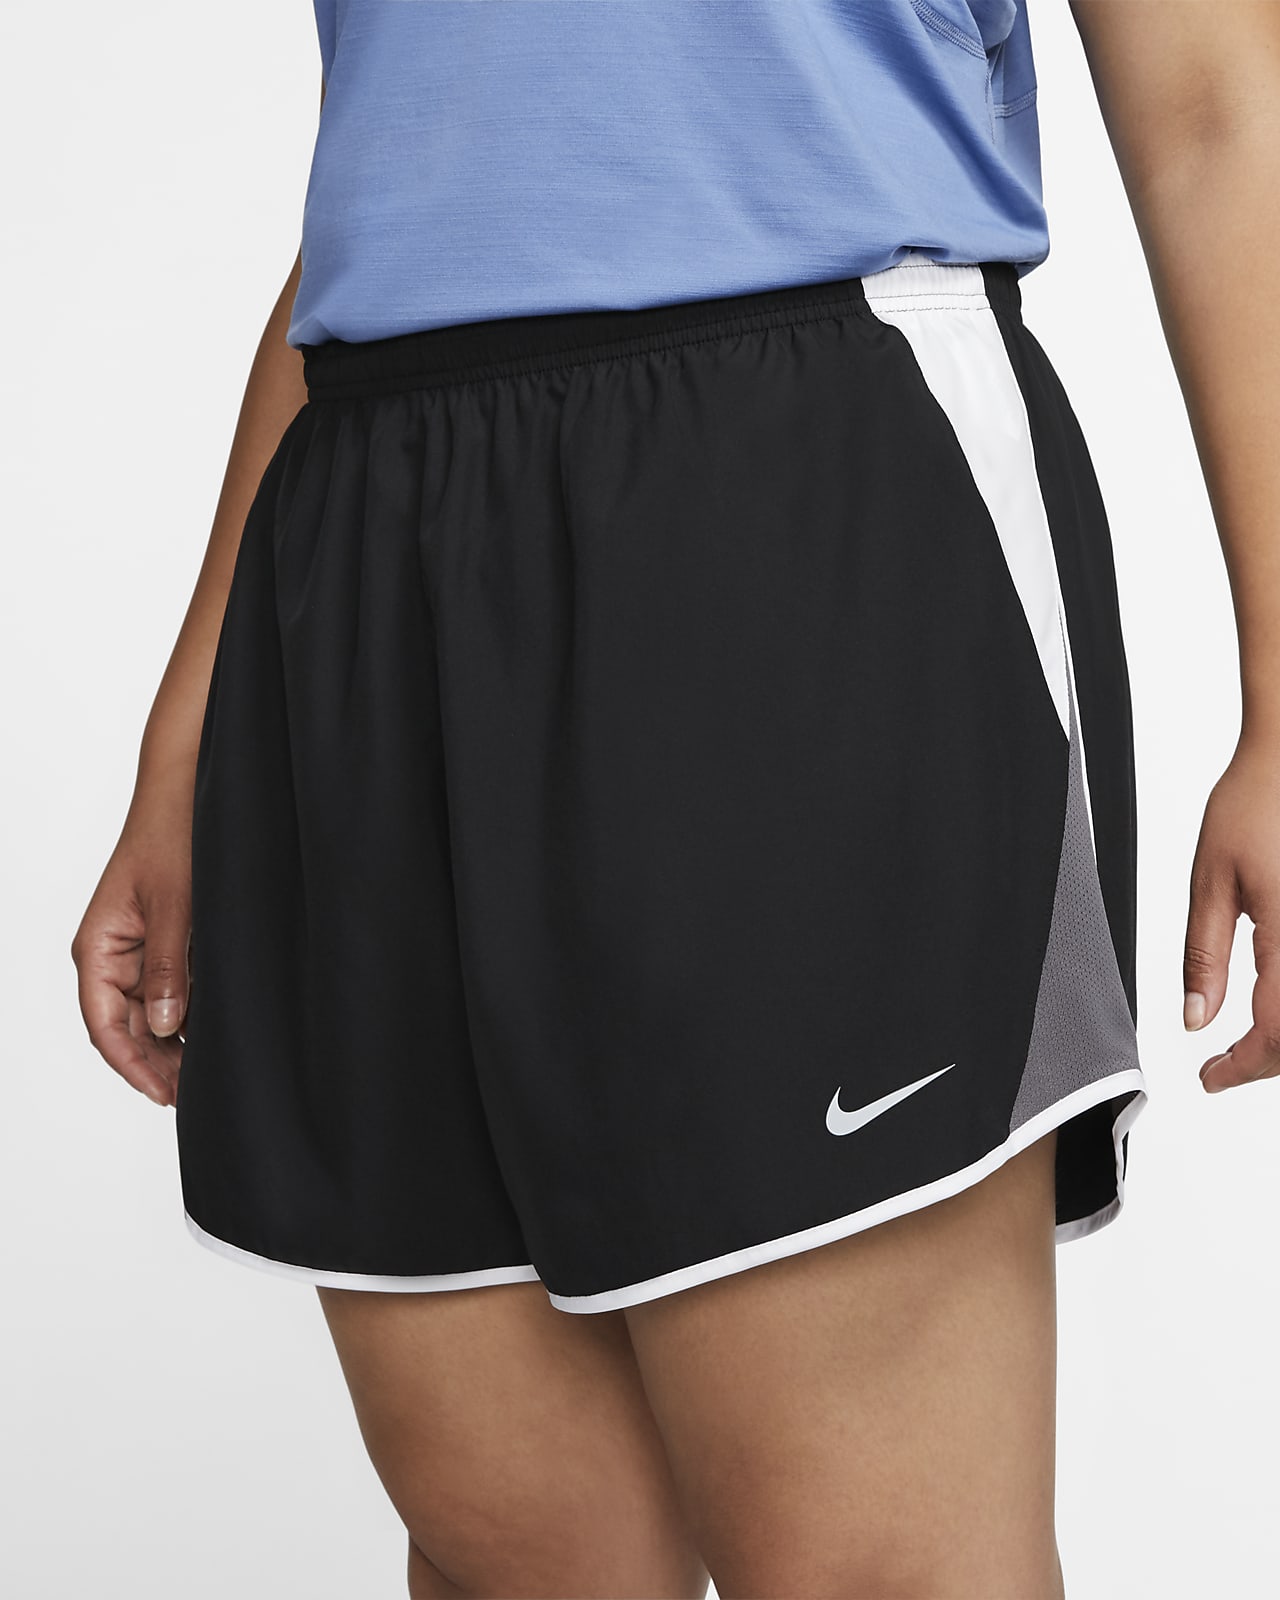 Nike Women's Running Shorts (Plus Size)